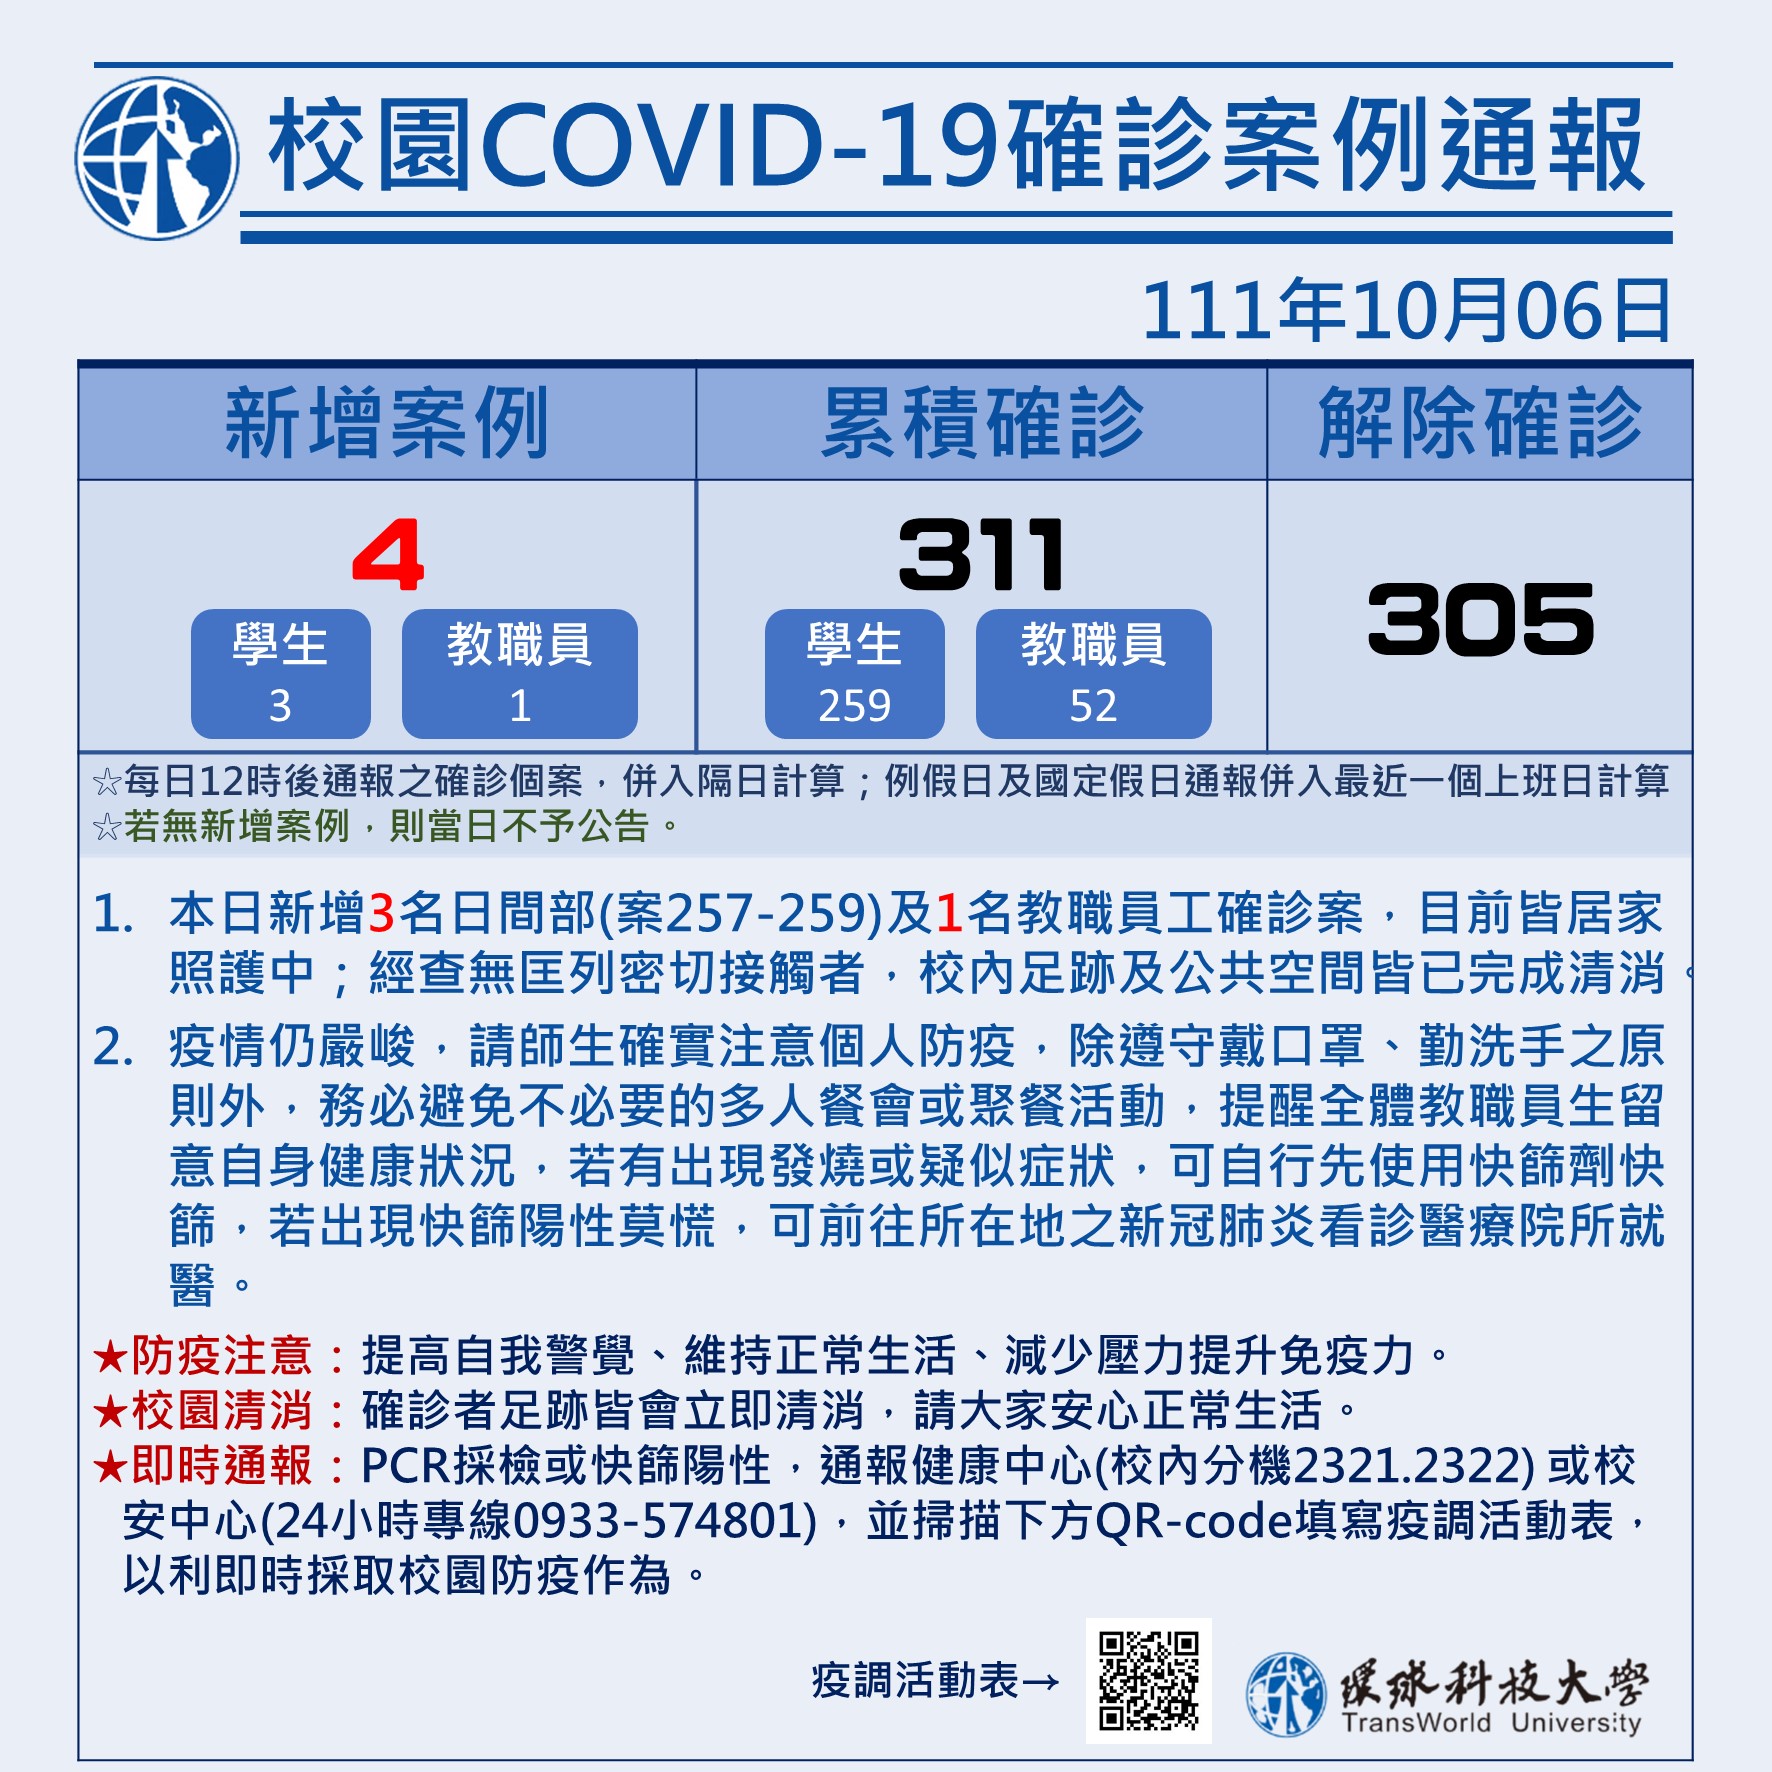 校園COVID-19案例統計1006